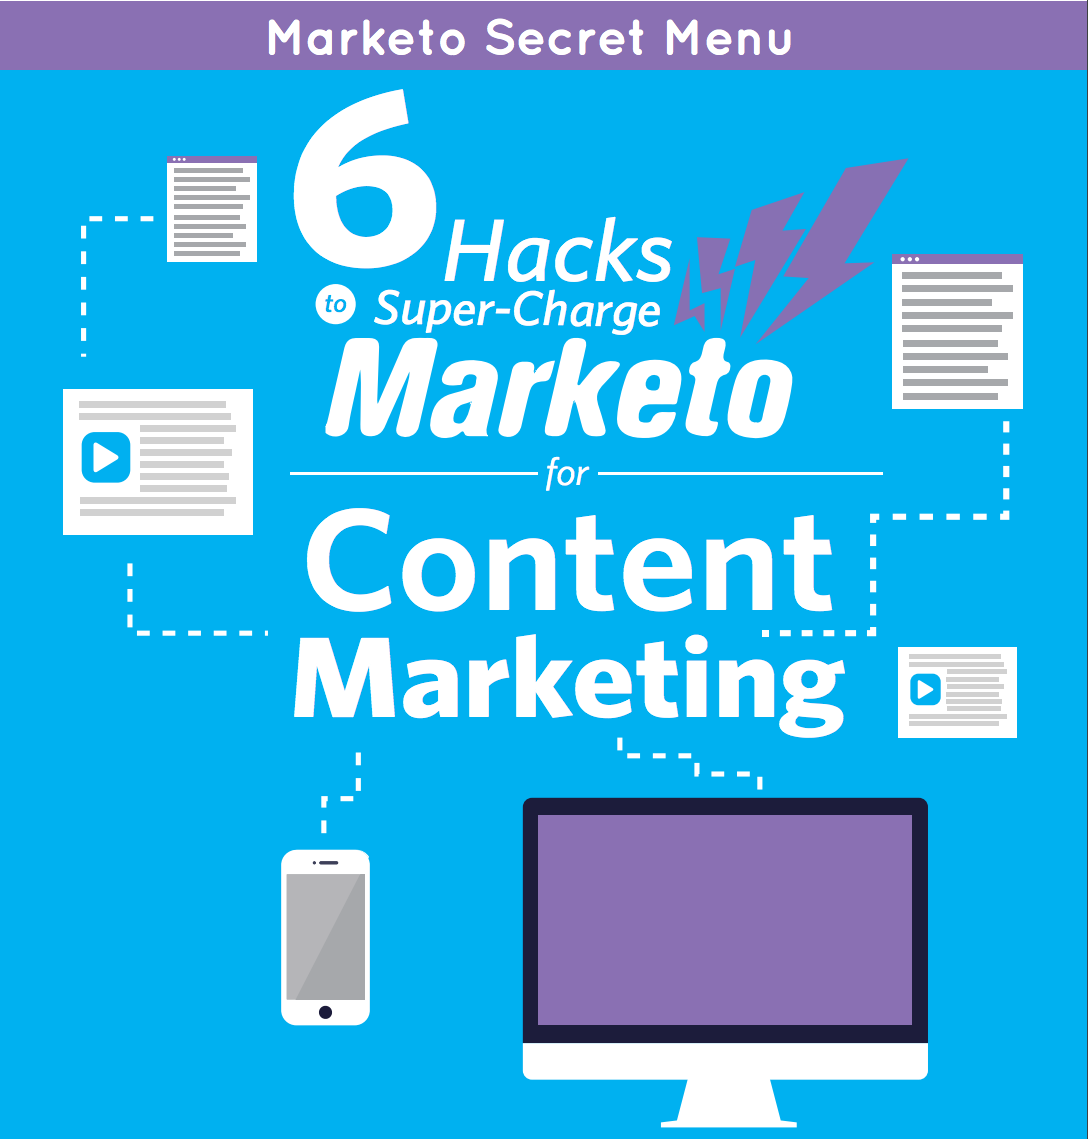 Marketo "Secret Menu" - 6 Marketo Hacks for Content Marketing